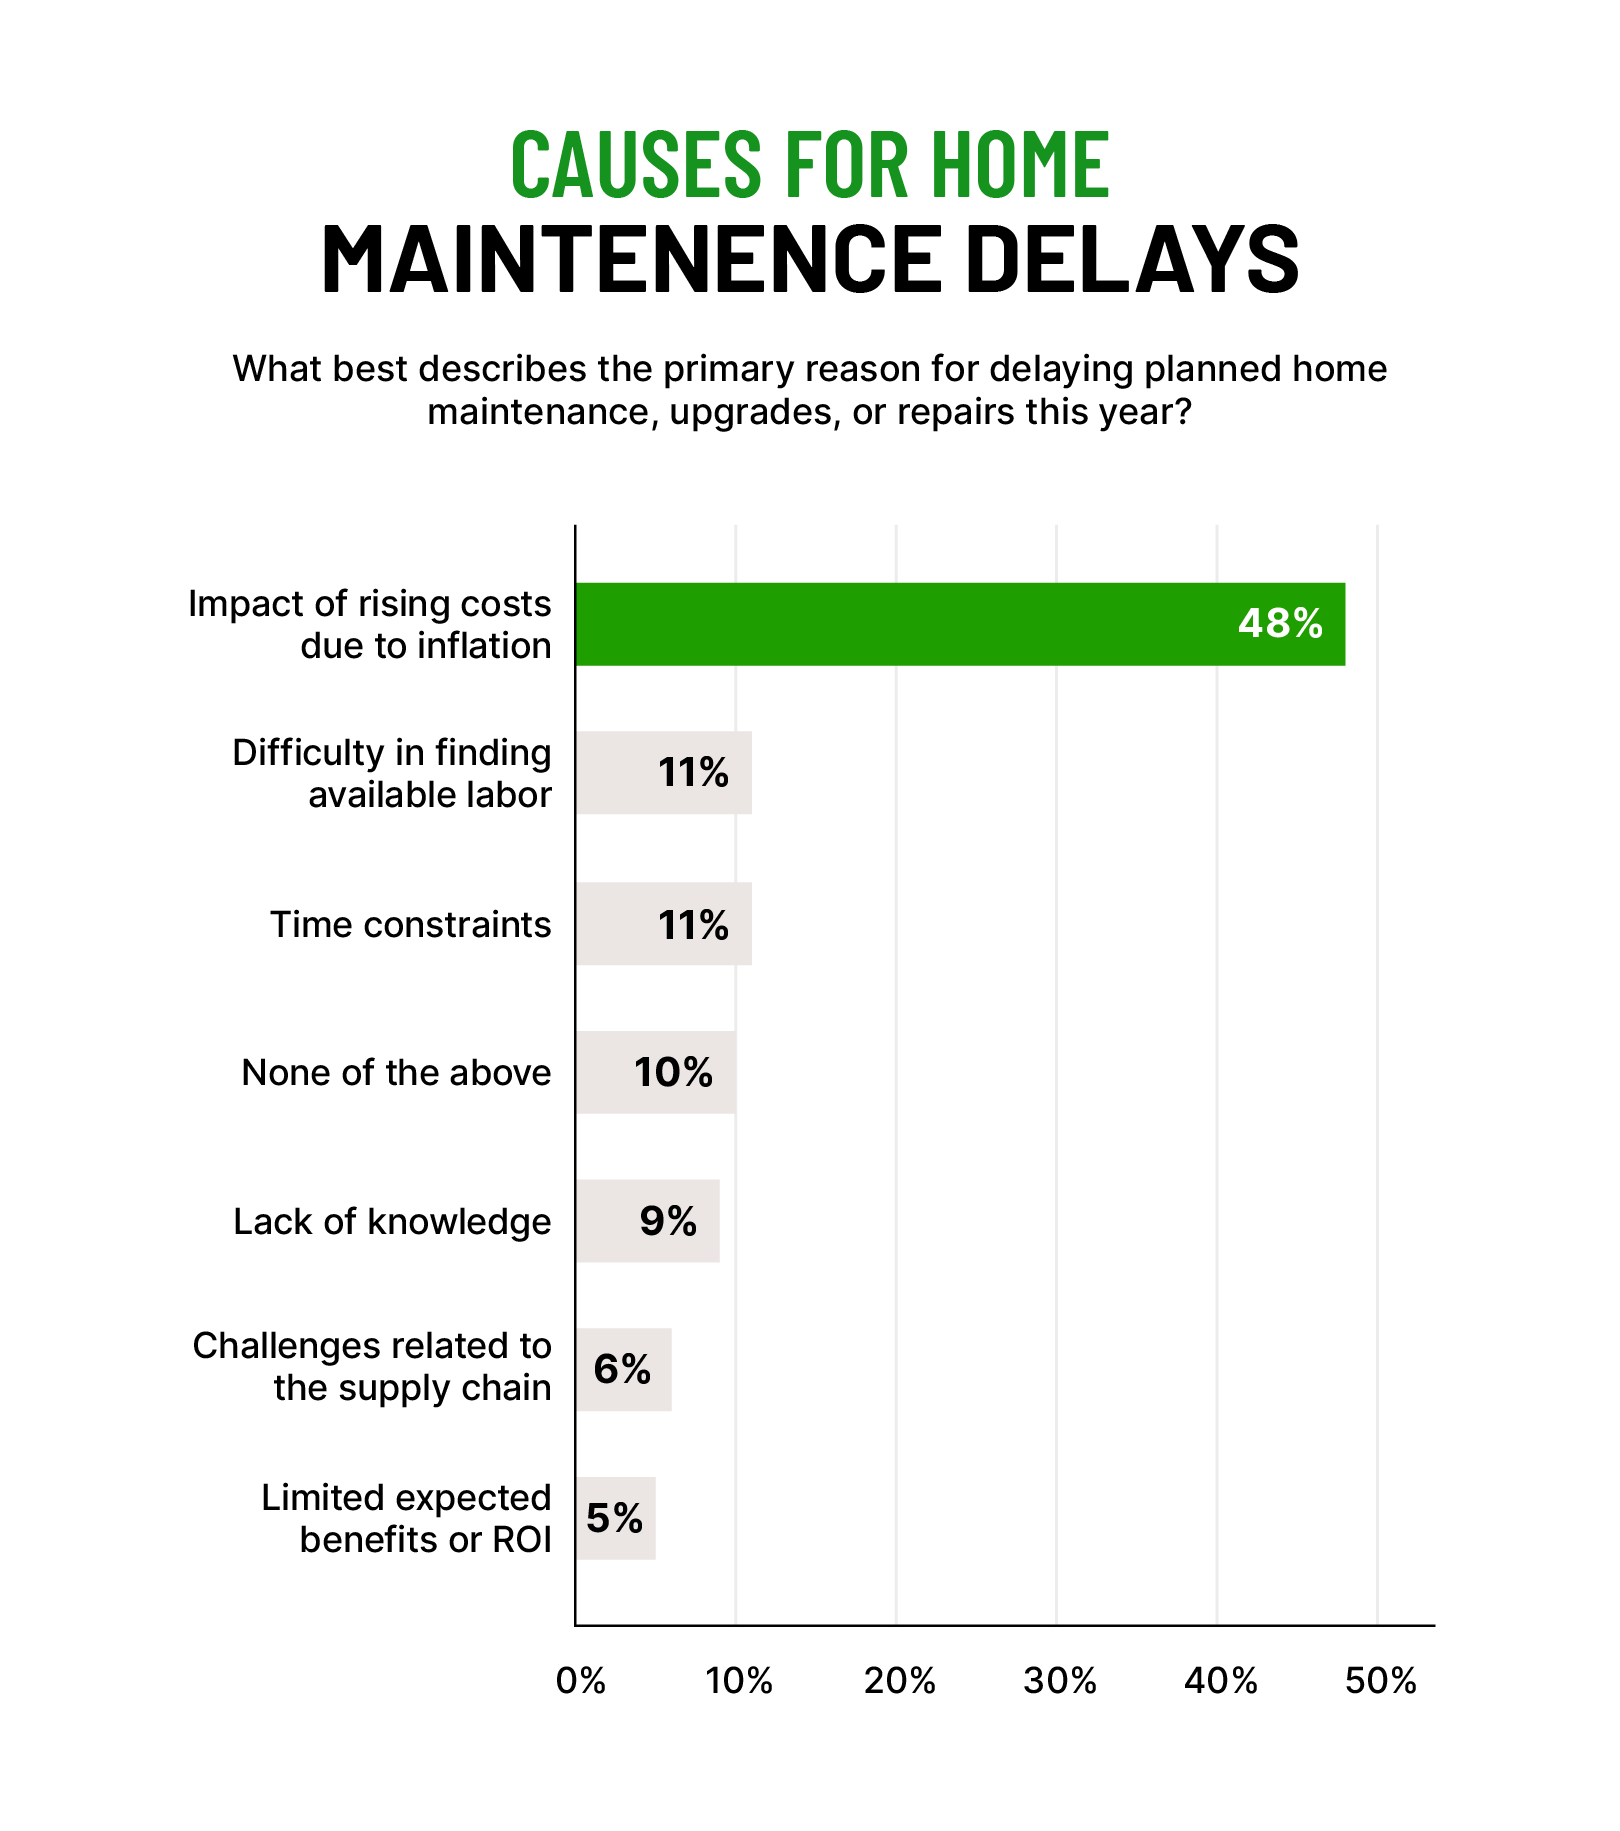 horizontal bar chart summarizing the causes for home maintenance delays